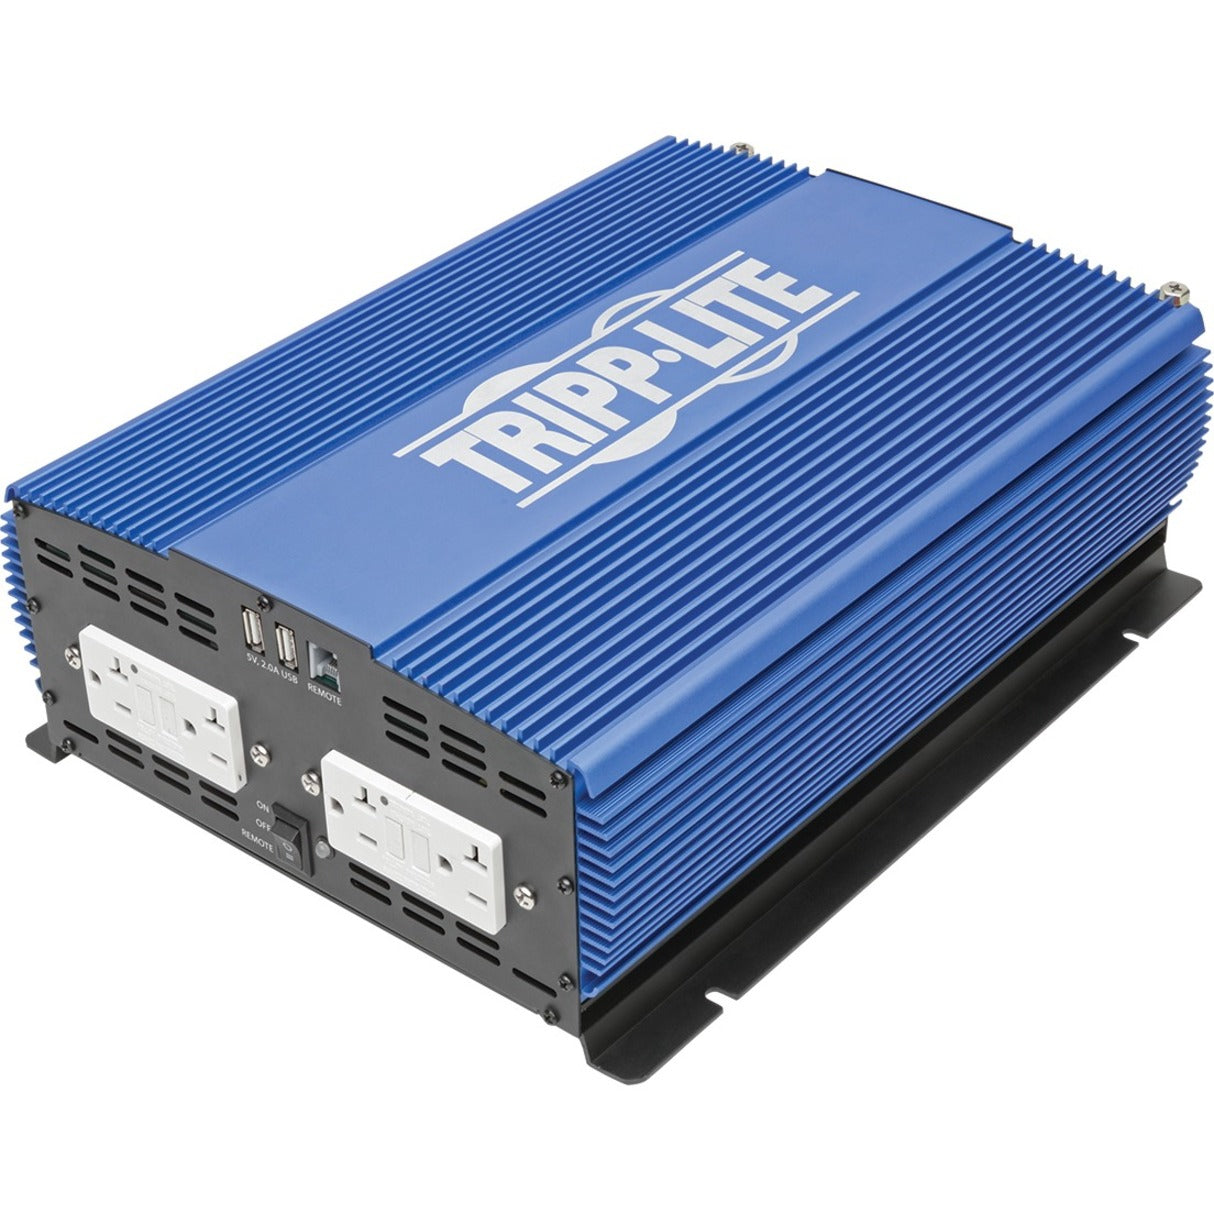 Tripp Lite PINV2000HS Power Inverter, 2000W Compact Mobile Portable, 4 Outlet 2 USB Port